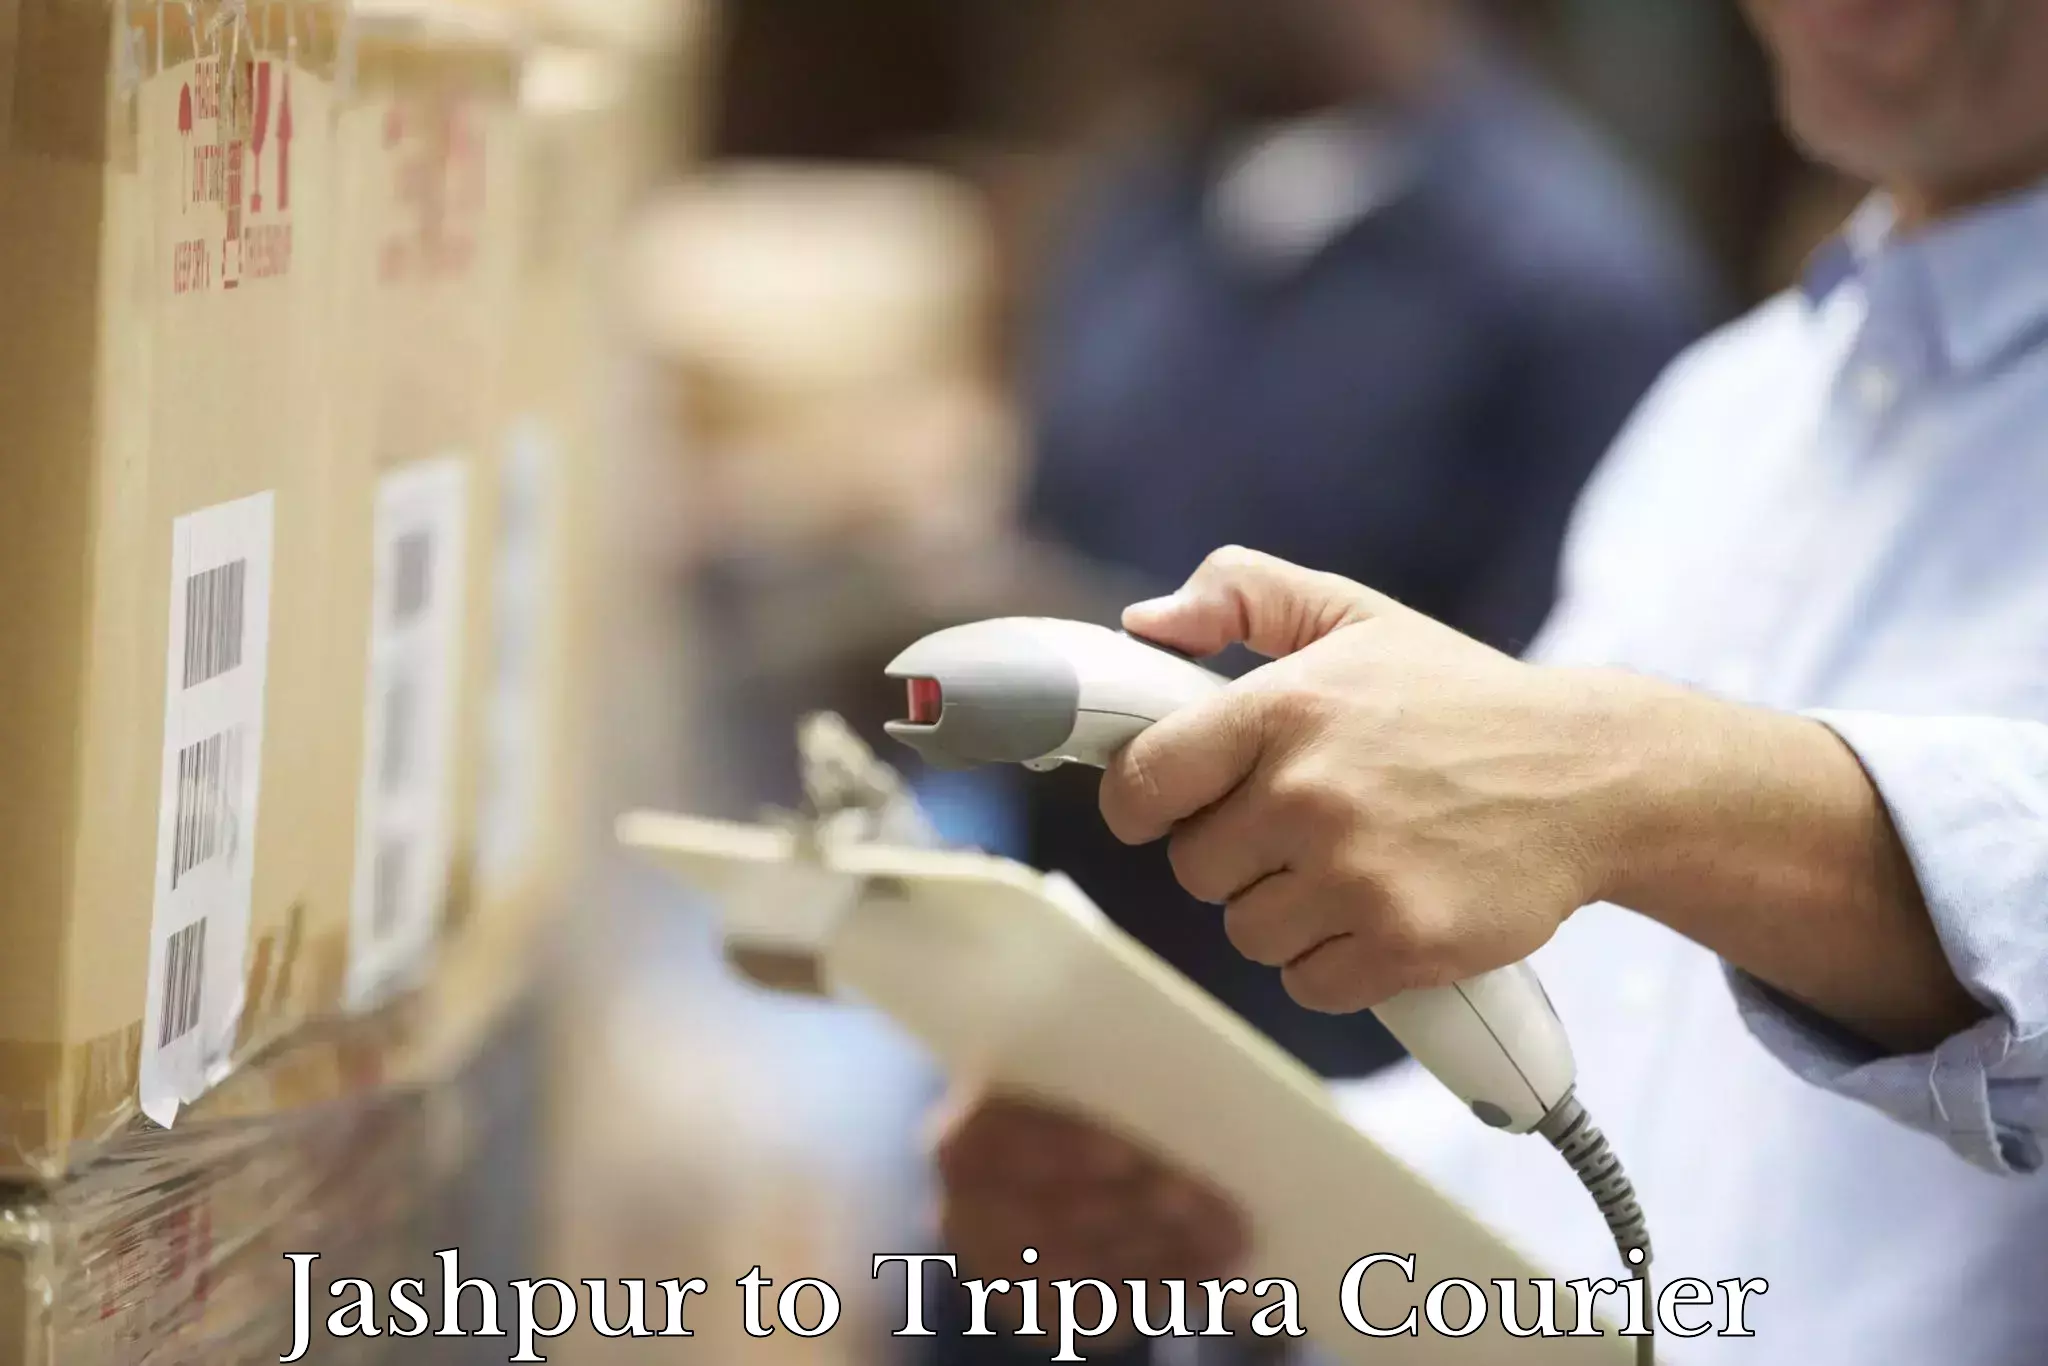 Courier service booking Jashpur to Tripura